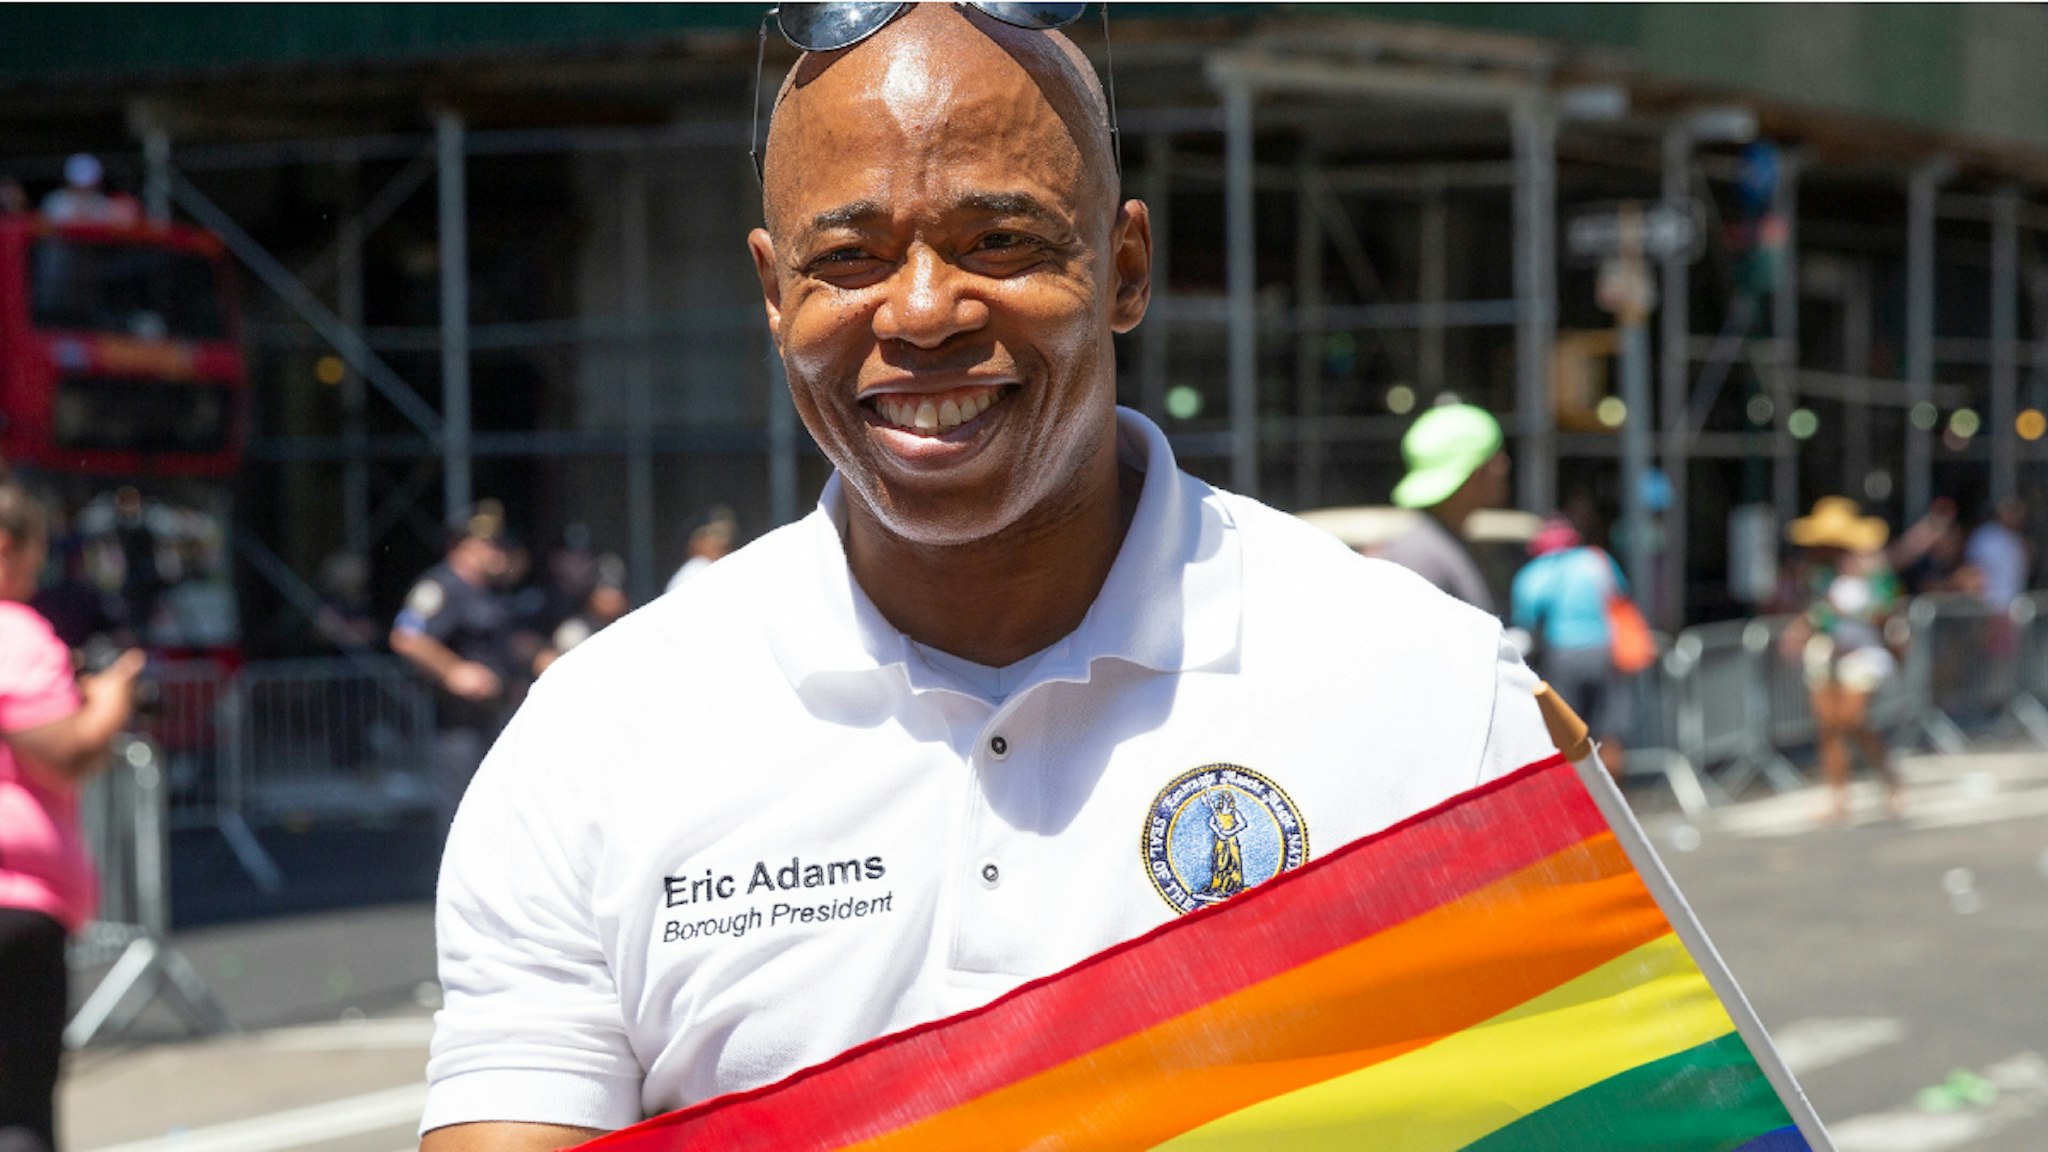 5TH AVENUE MANHATTAN, NEW YORK, UNITED STATES - 2019/06/30: Brooklyn borough president Eric Adams marches at New York 2019 Pride March on 5th Avenue in Manhattan.